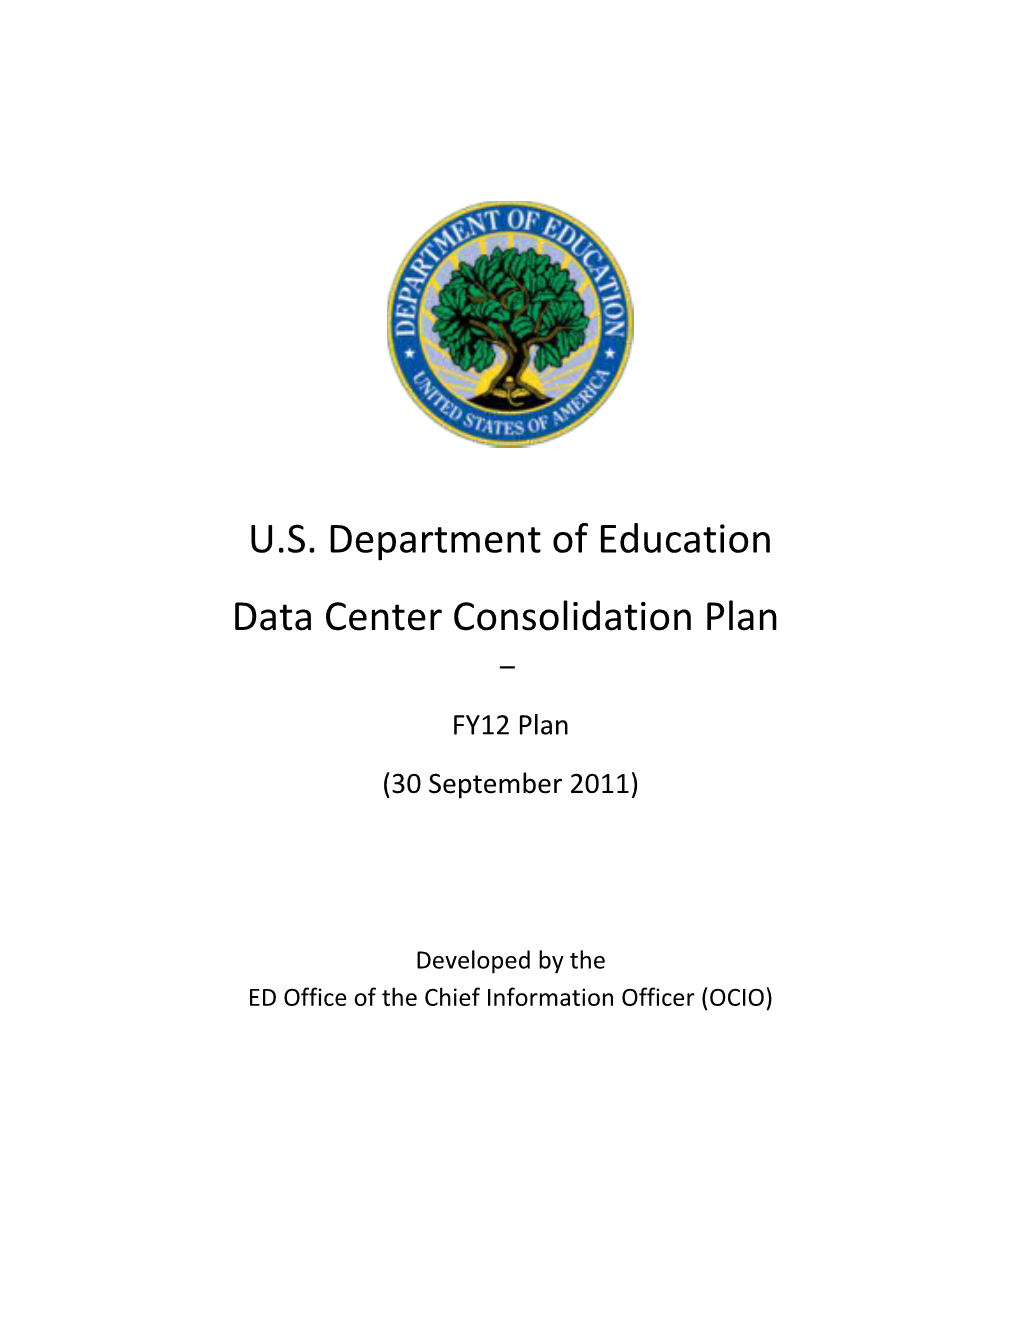 ED Data Center Consolidation Plan FY12